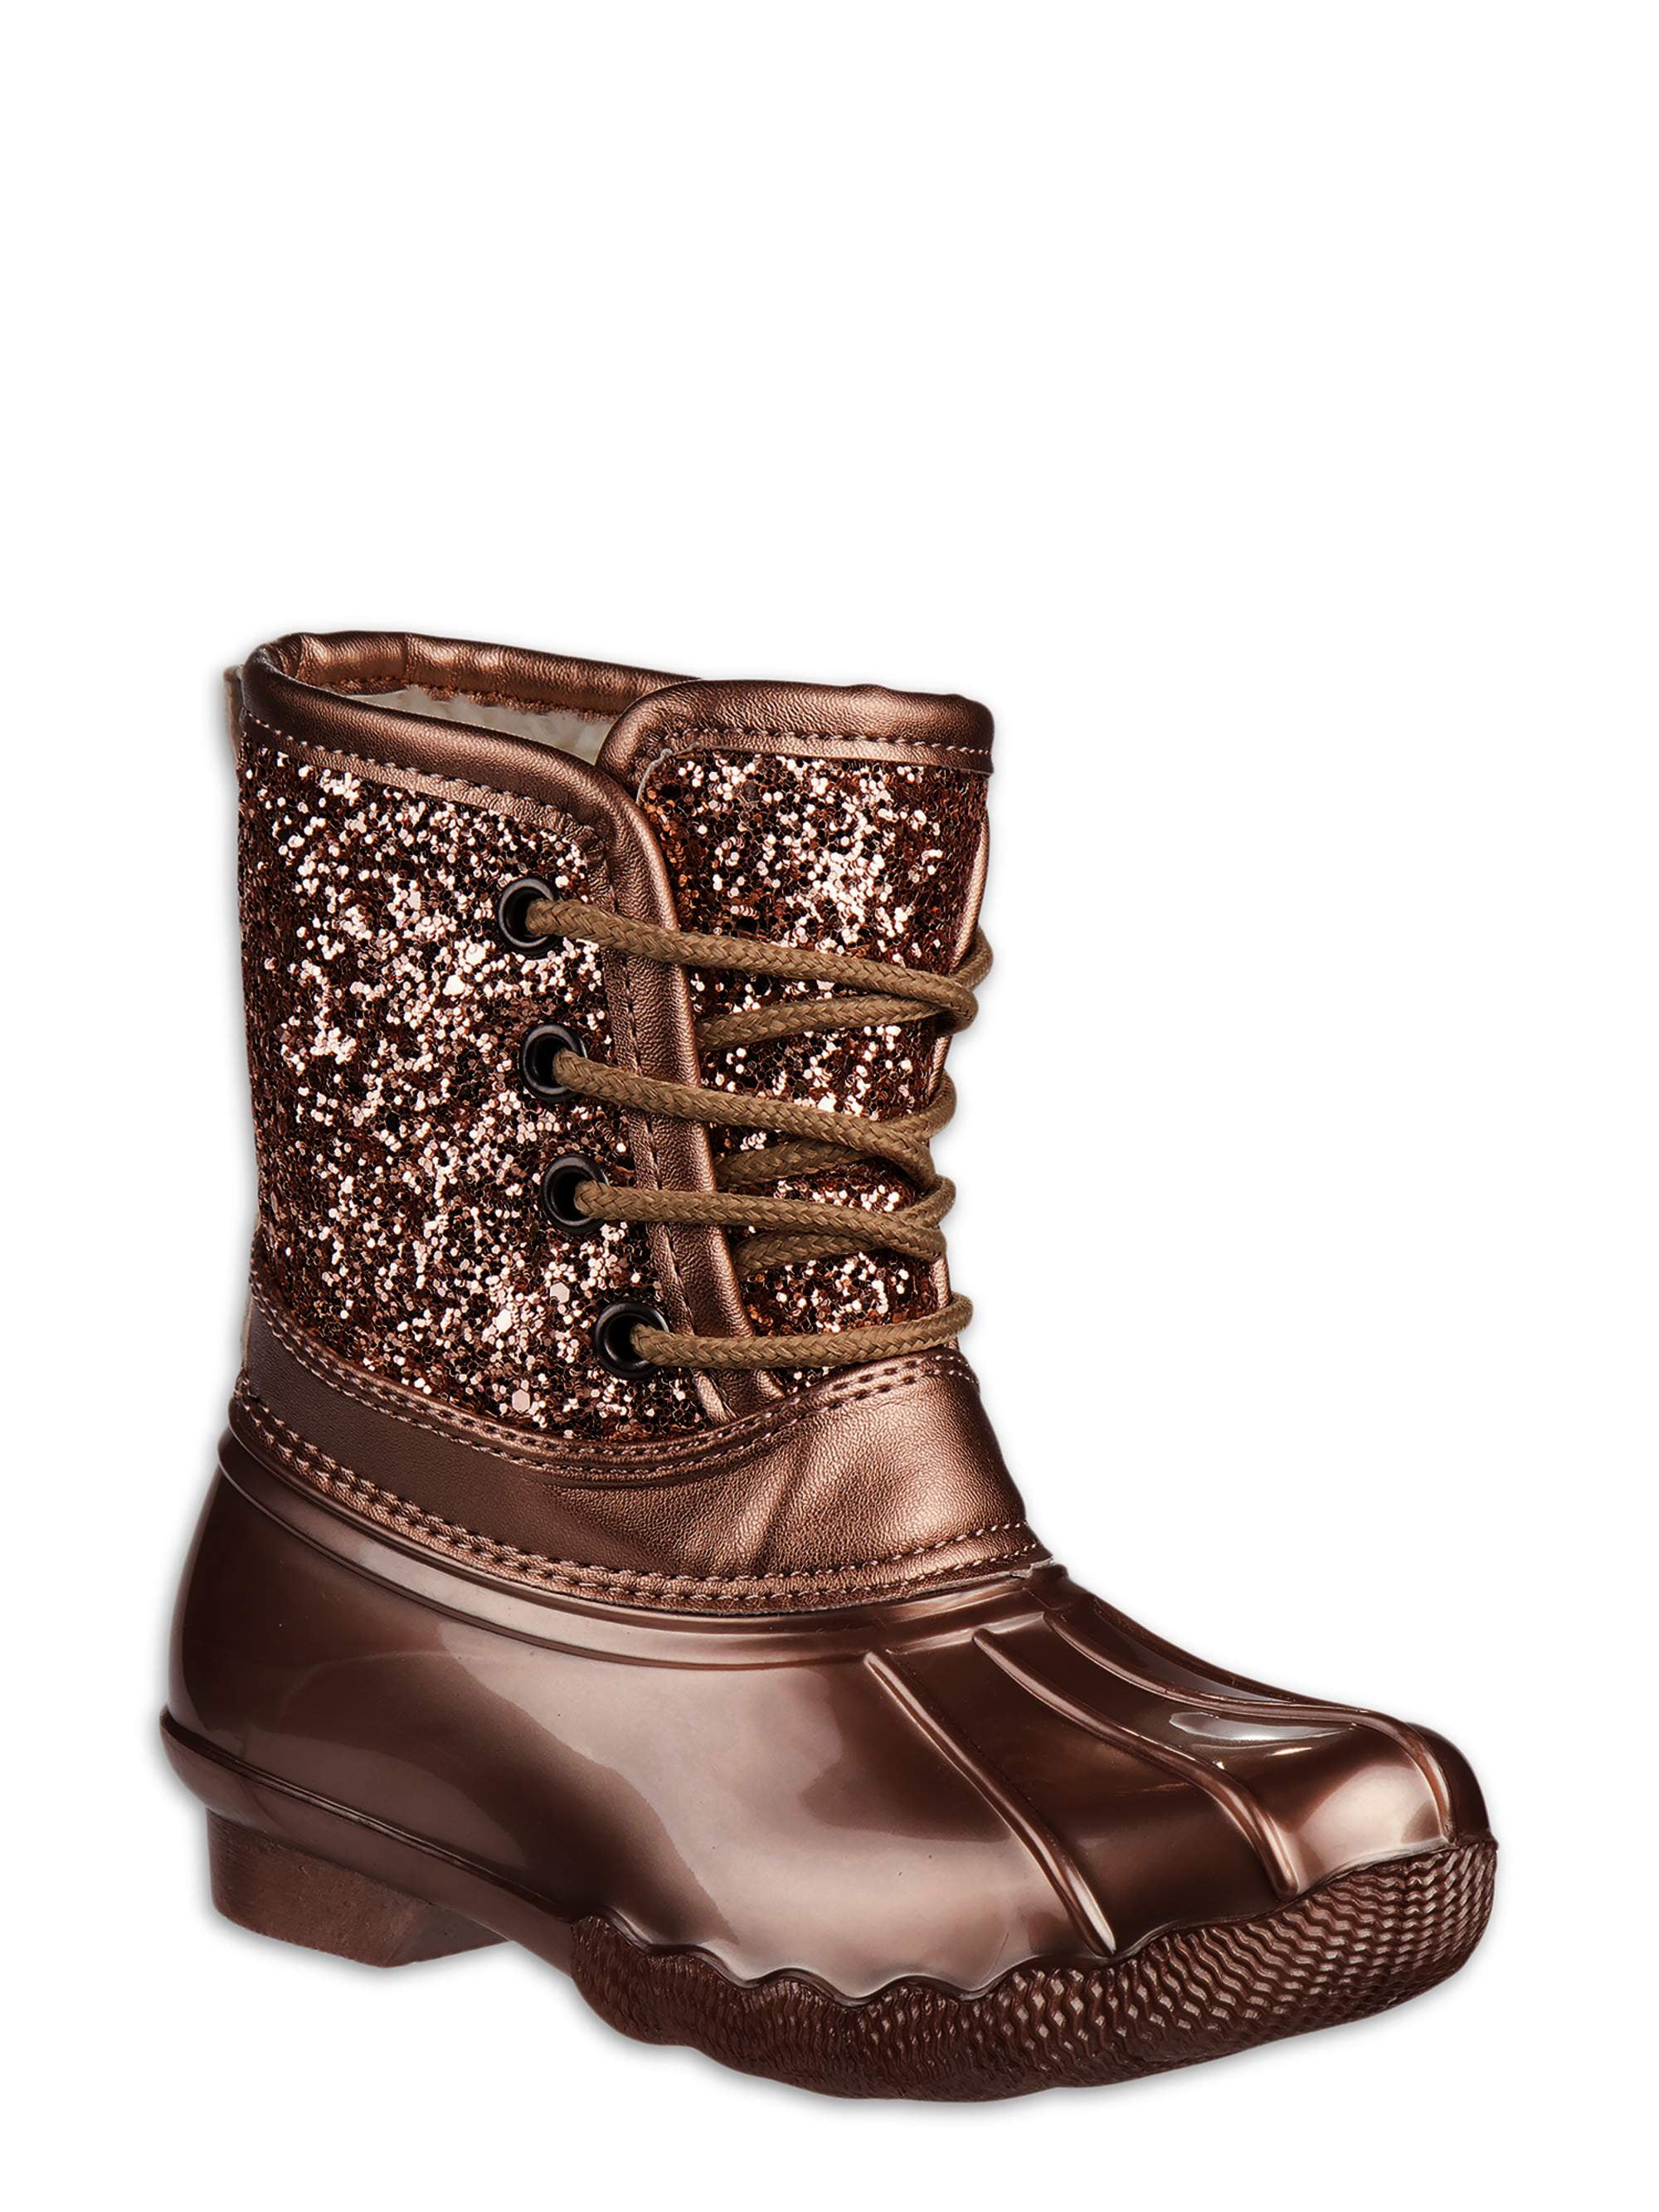 Josmo Glittery Duck Boots (Girls 